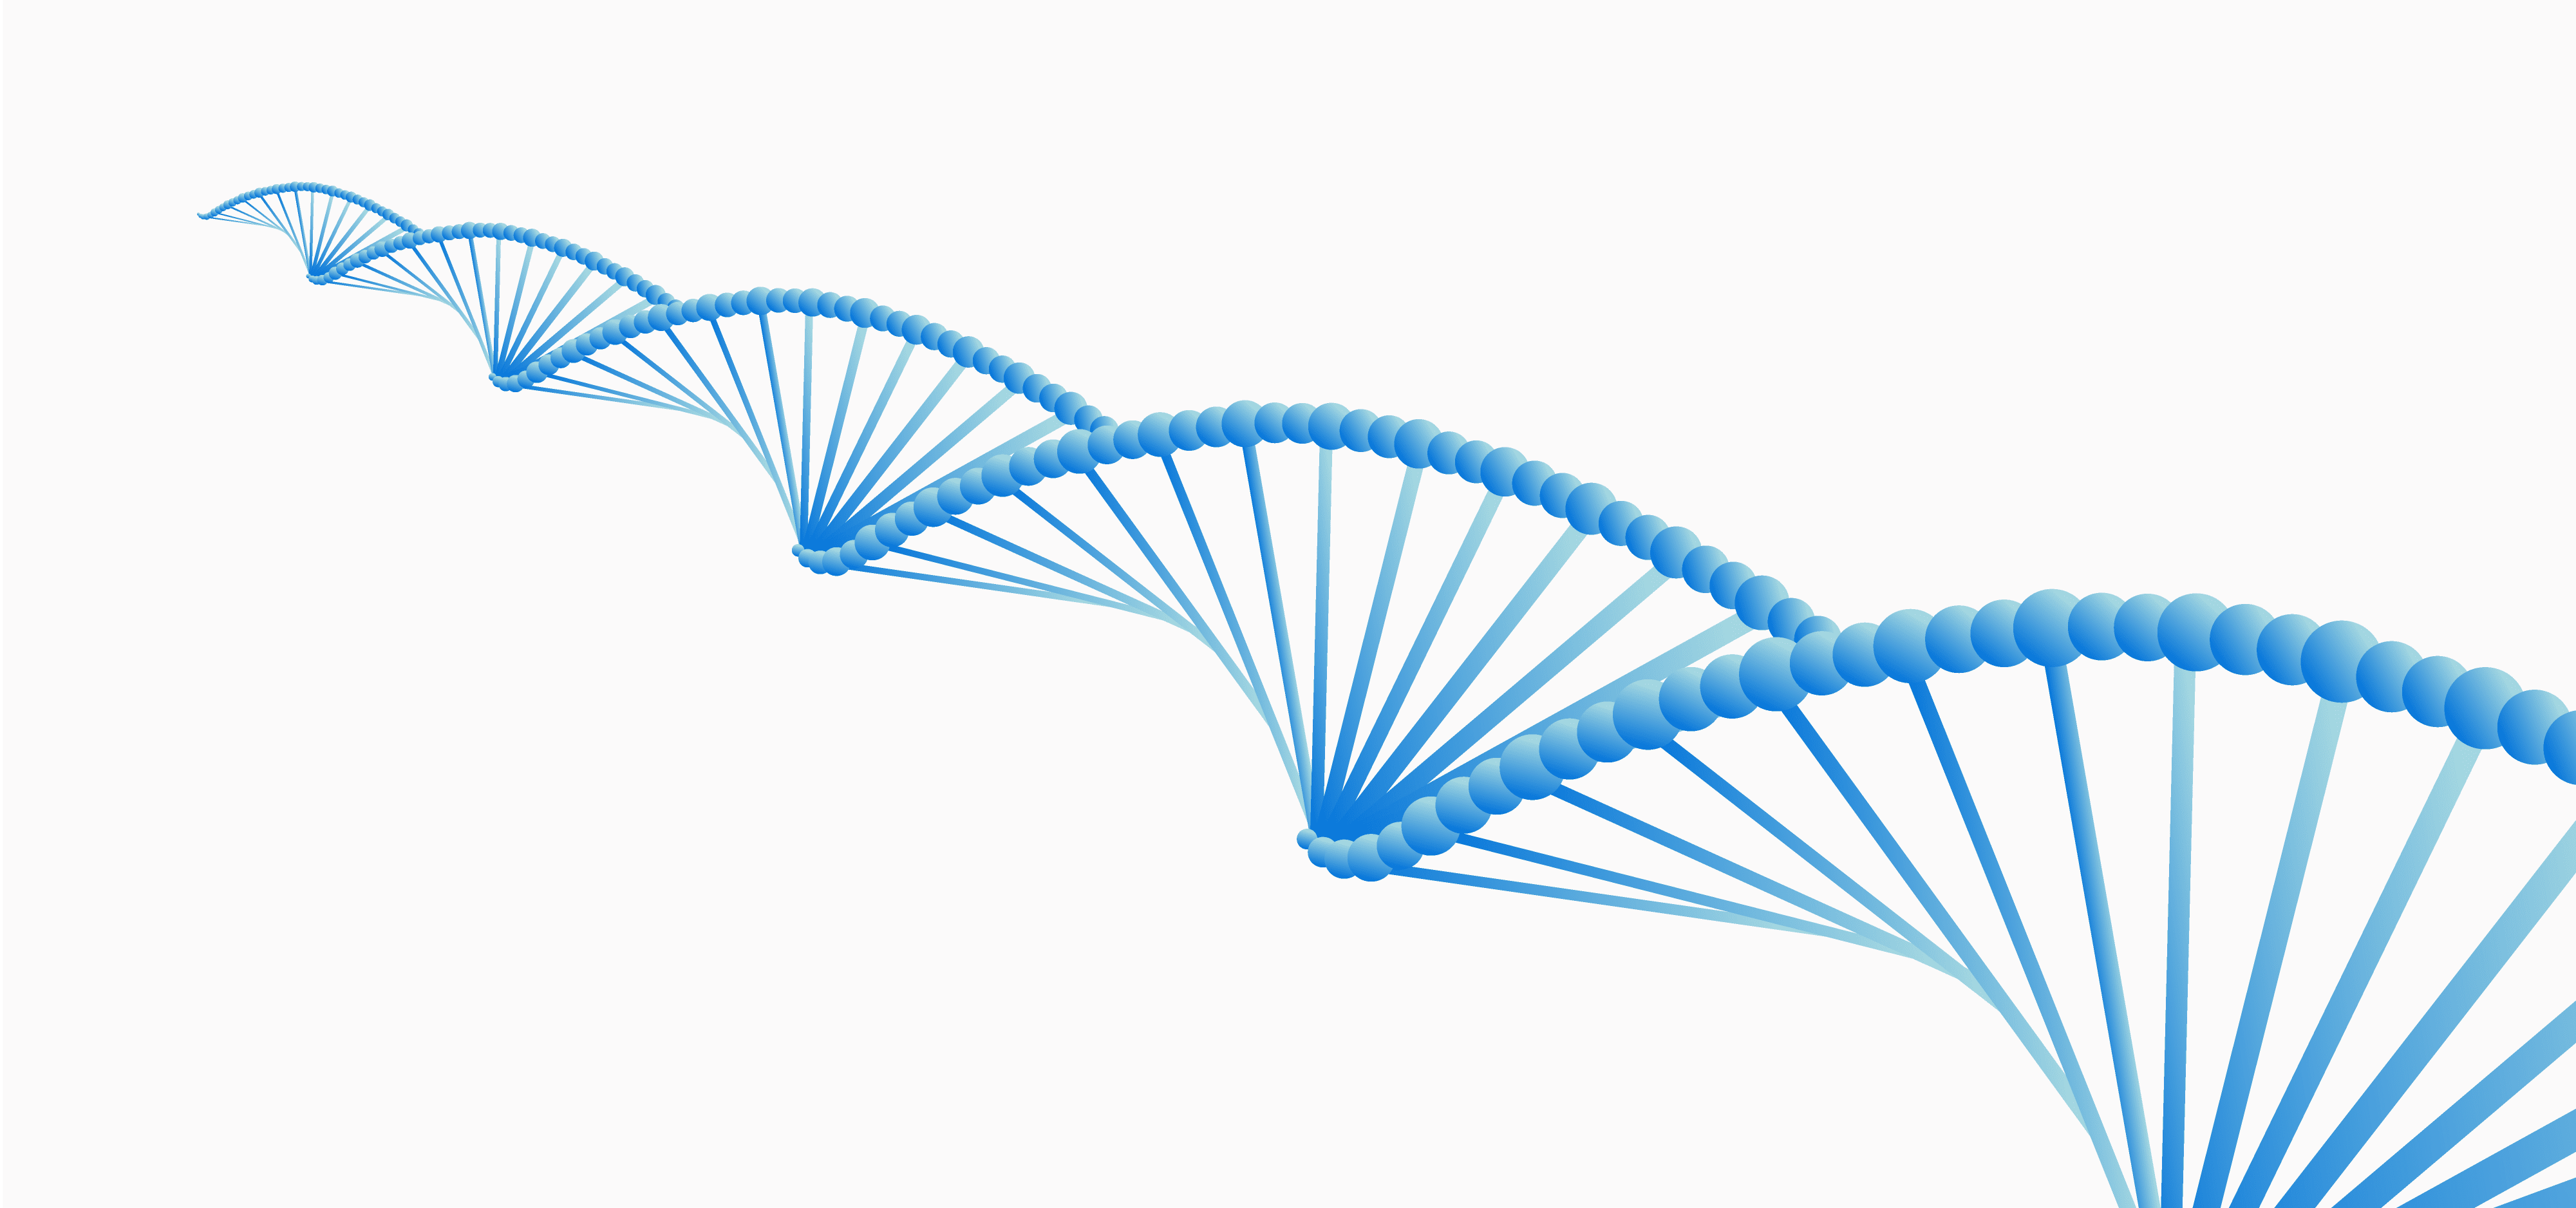 an illustration of DNA.